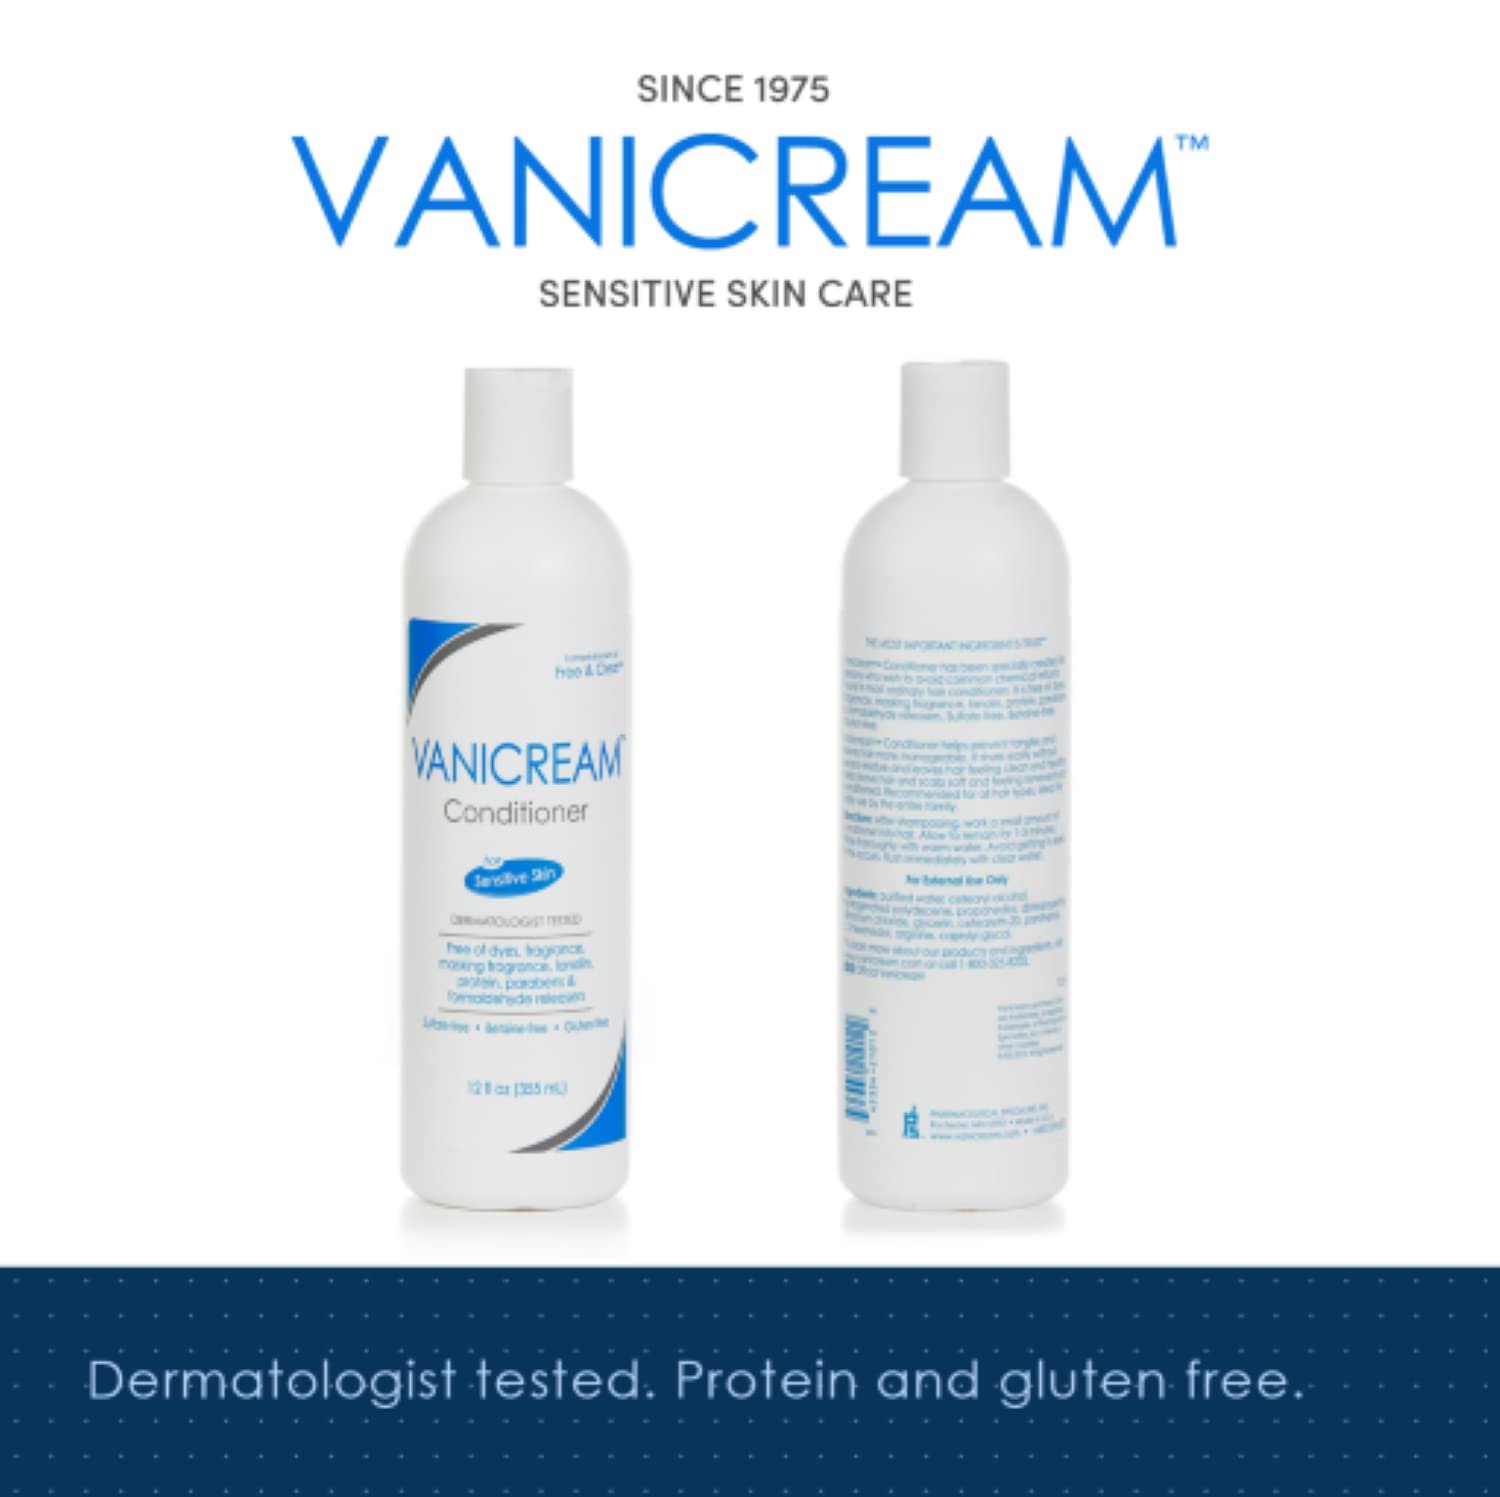 Vanicream Hair Conditioner -12 fl oz – Unscented, Gluten-Free Formula Leaves Sensitive Scalp Feeling Renewed